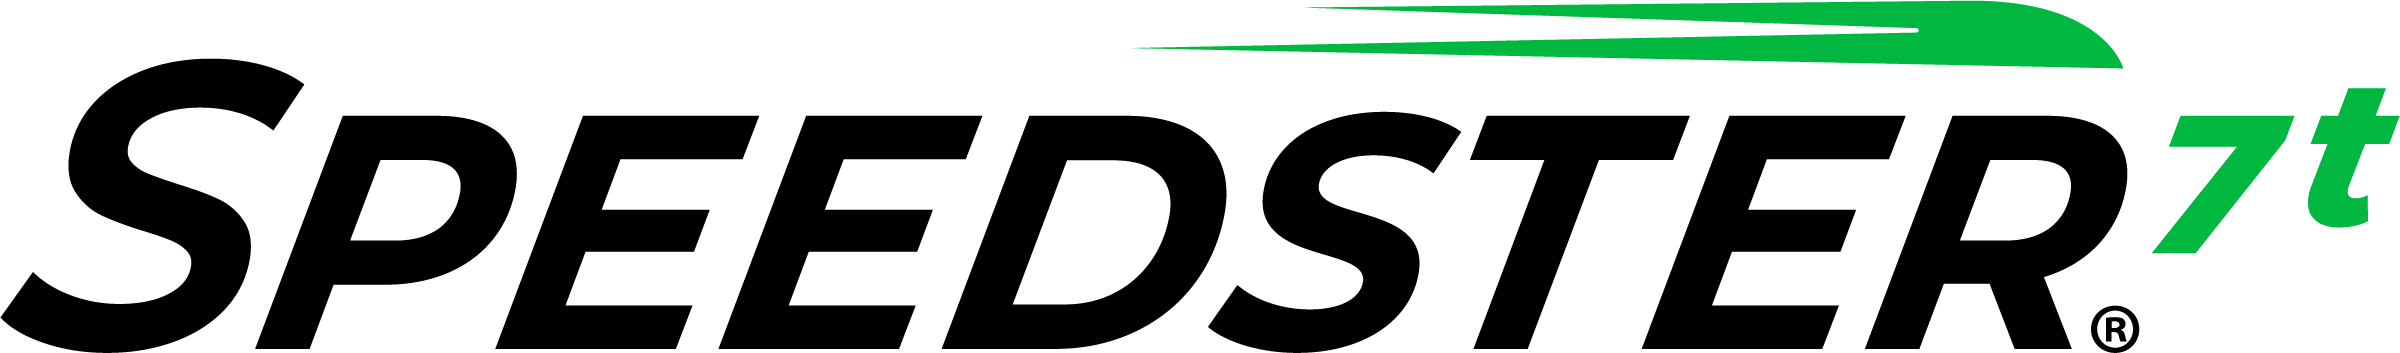 Speedster7t logo